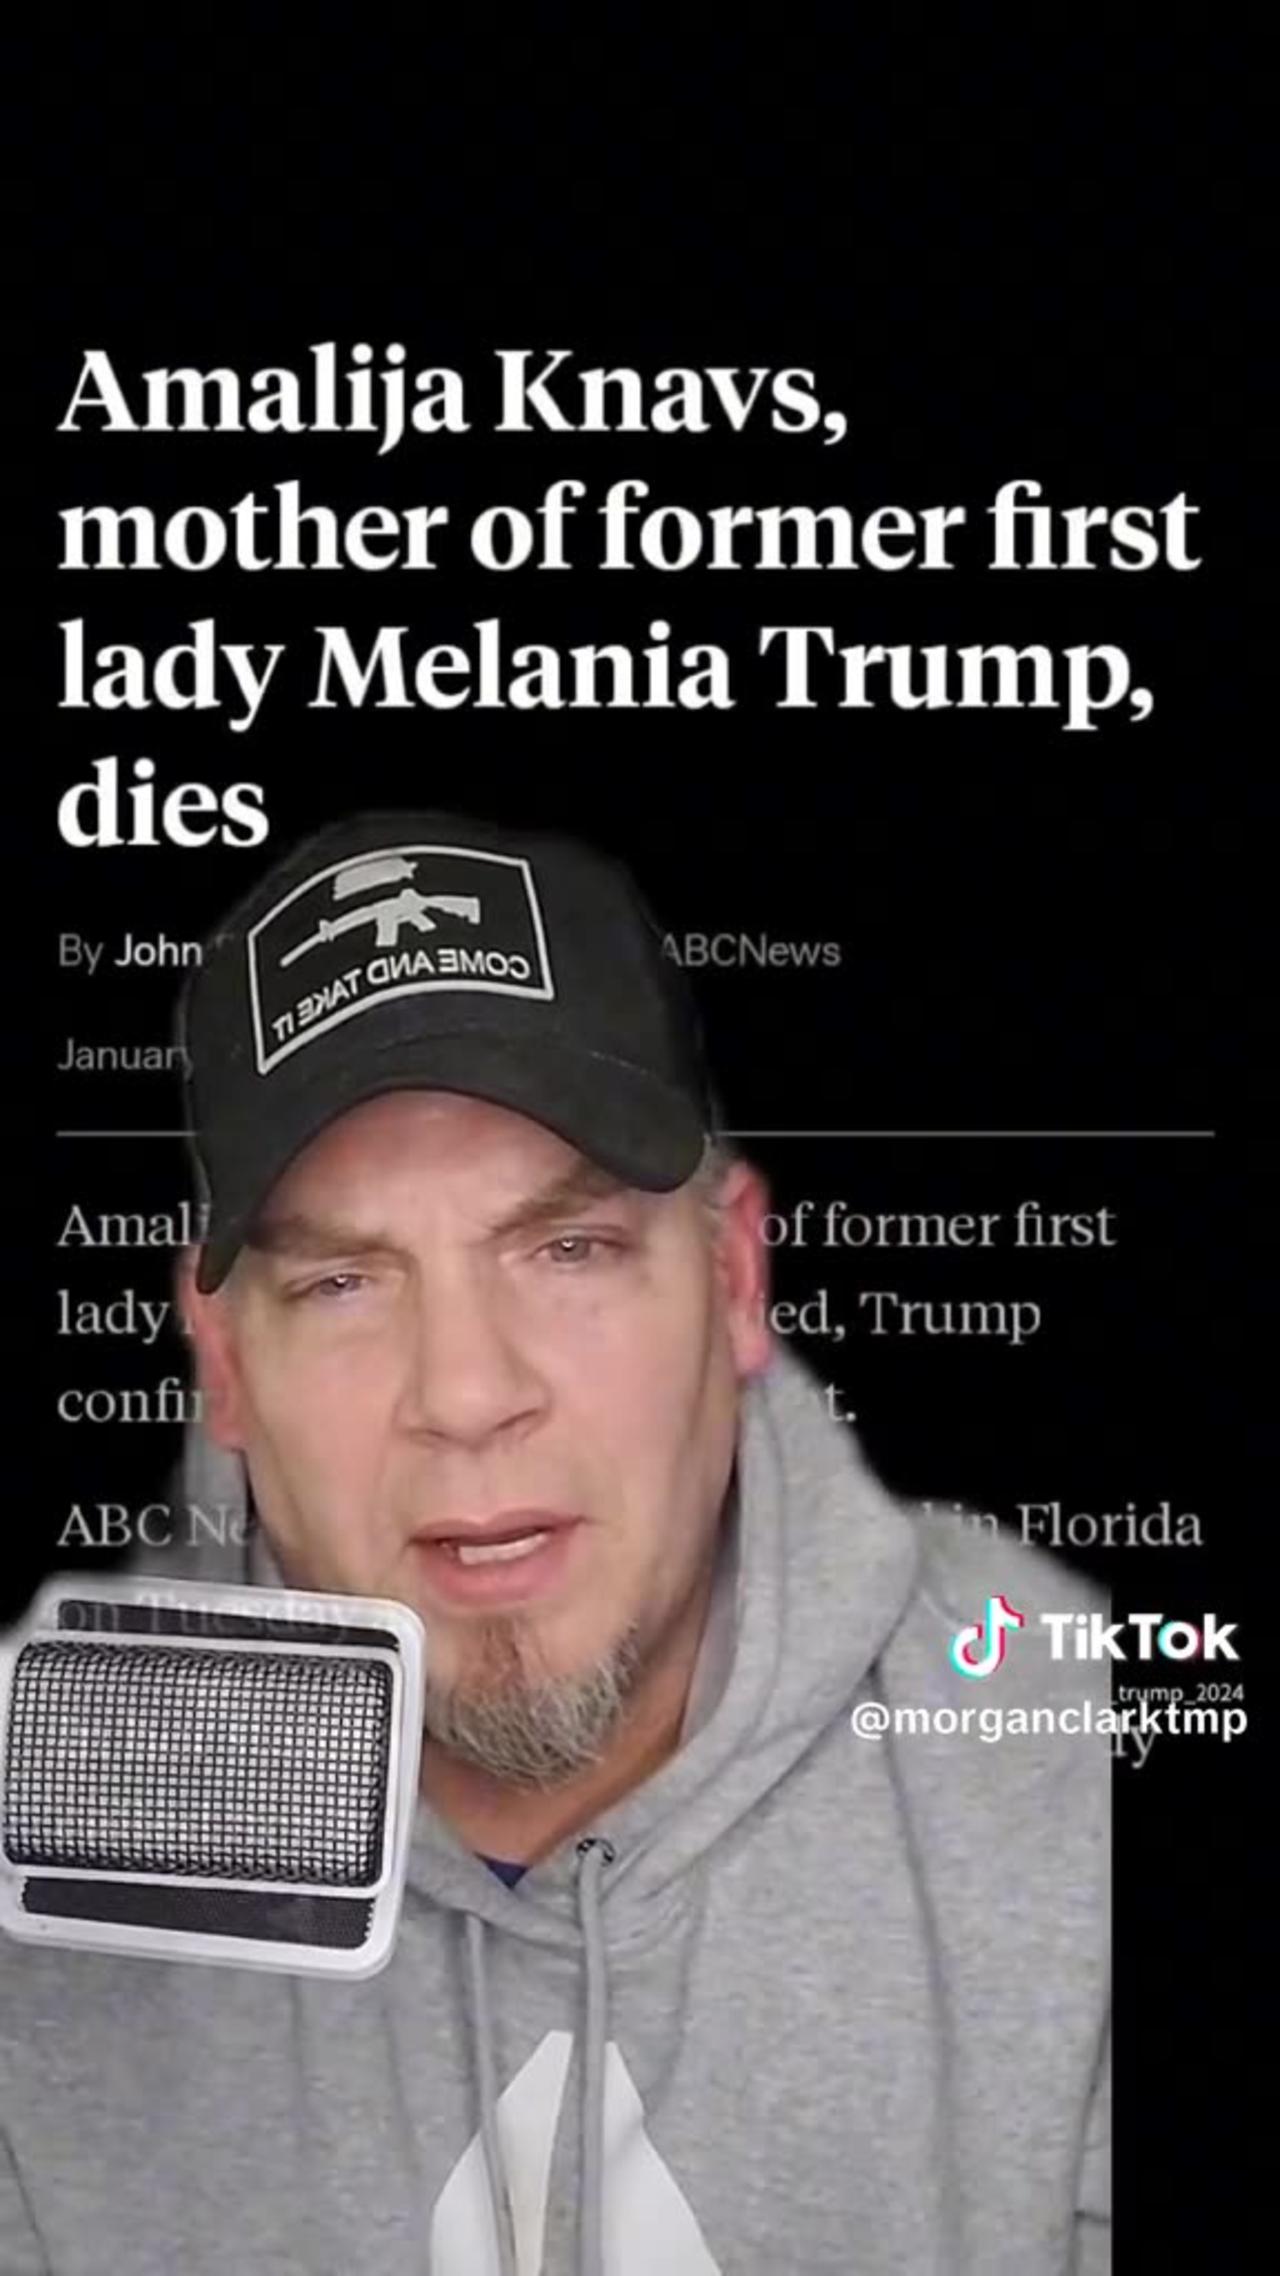 MELANIA TRUMP’S MOTHER HAS PASSED AWAY